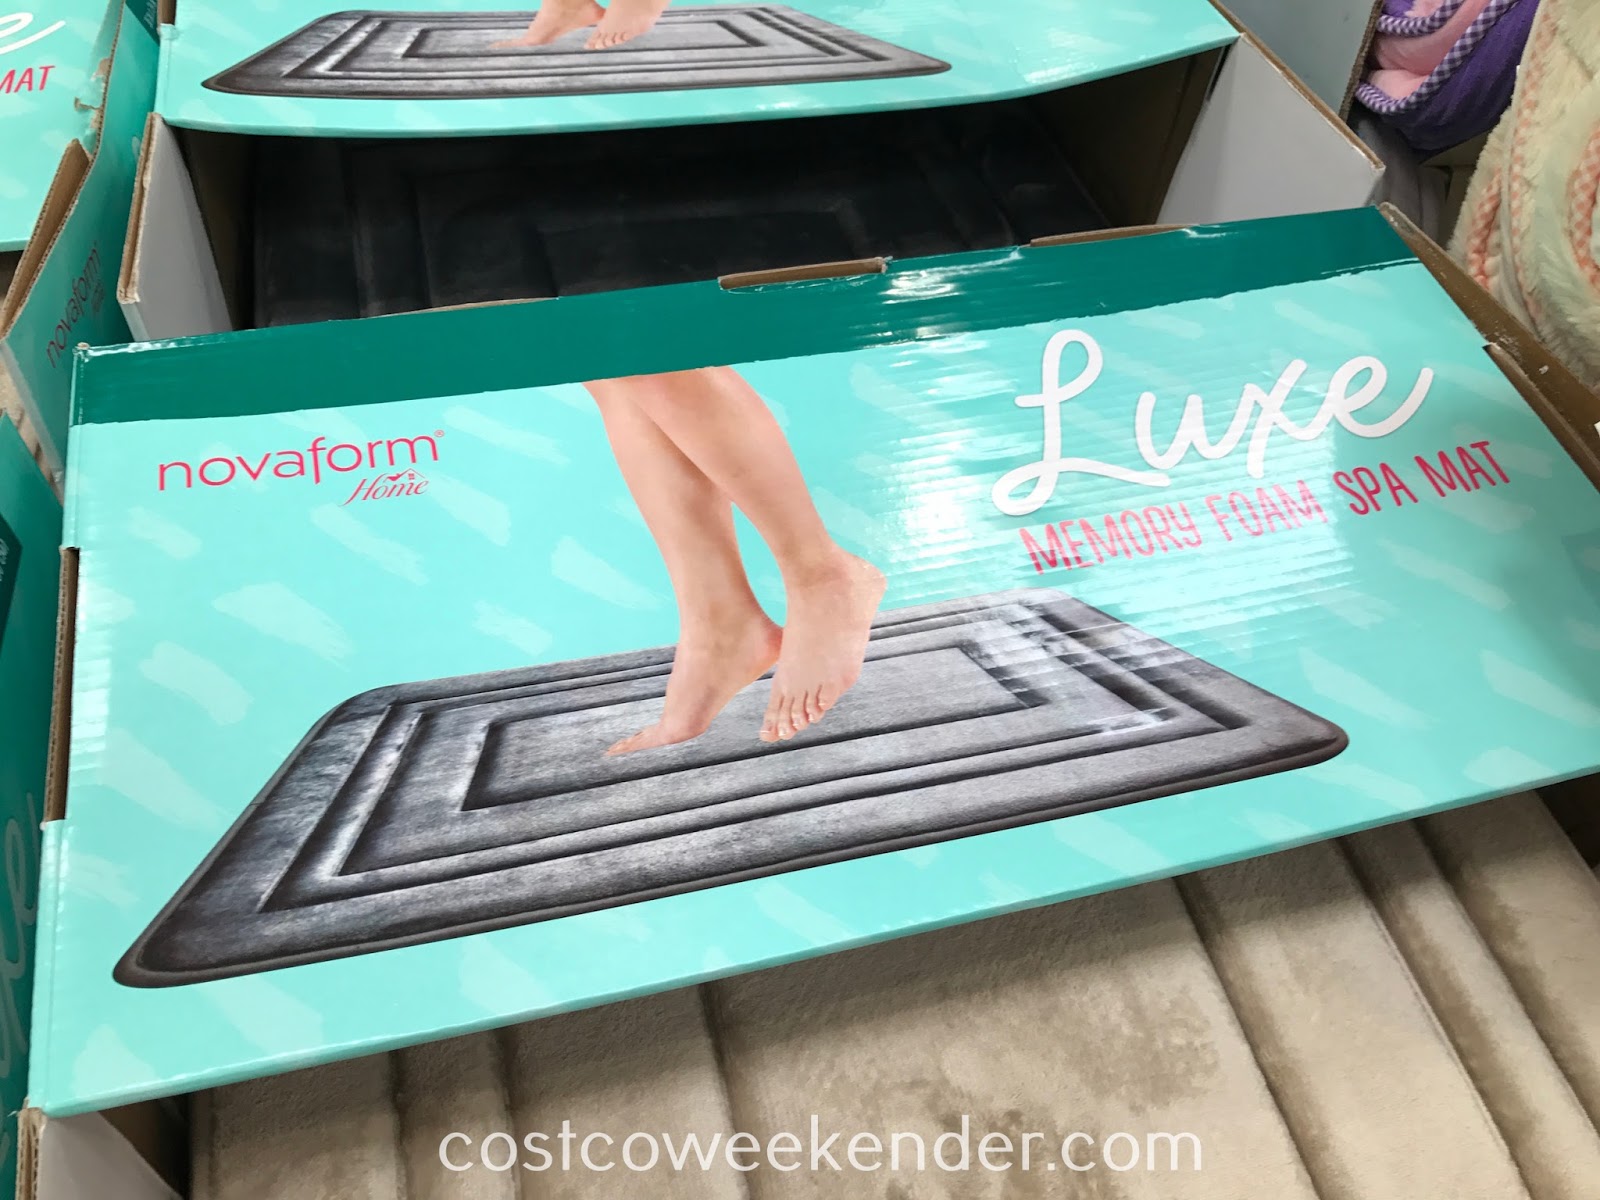 Sleep Innovation Novaform Luxe Memory Foam Spa Mat Costco Weekender